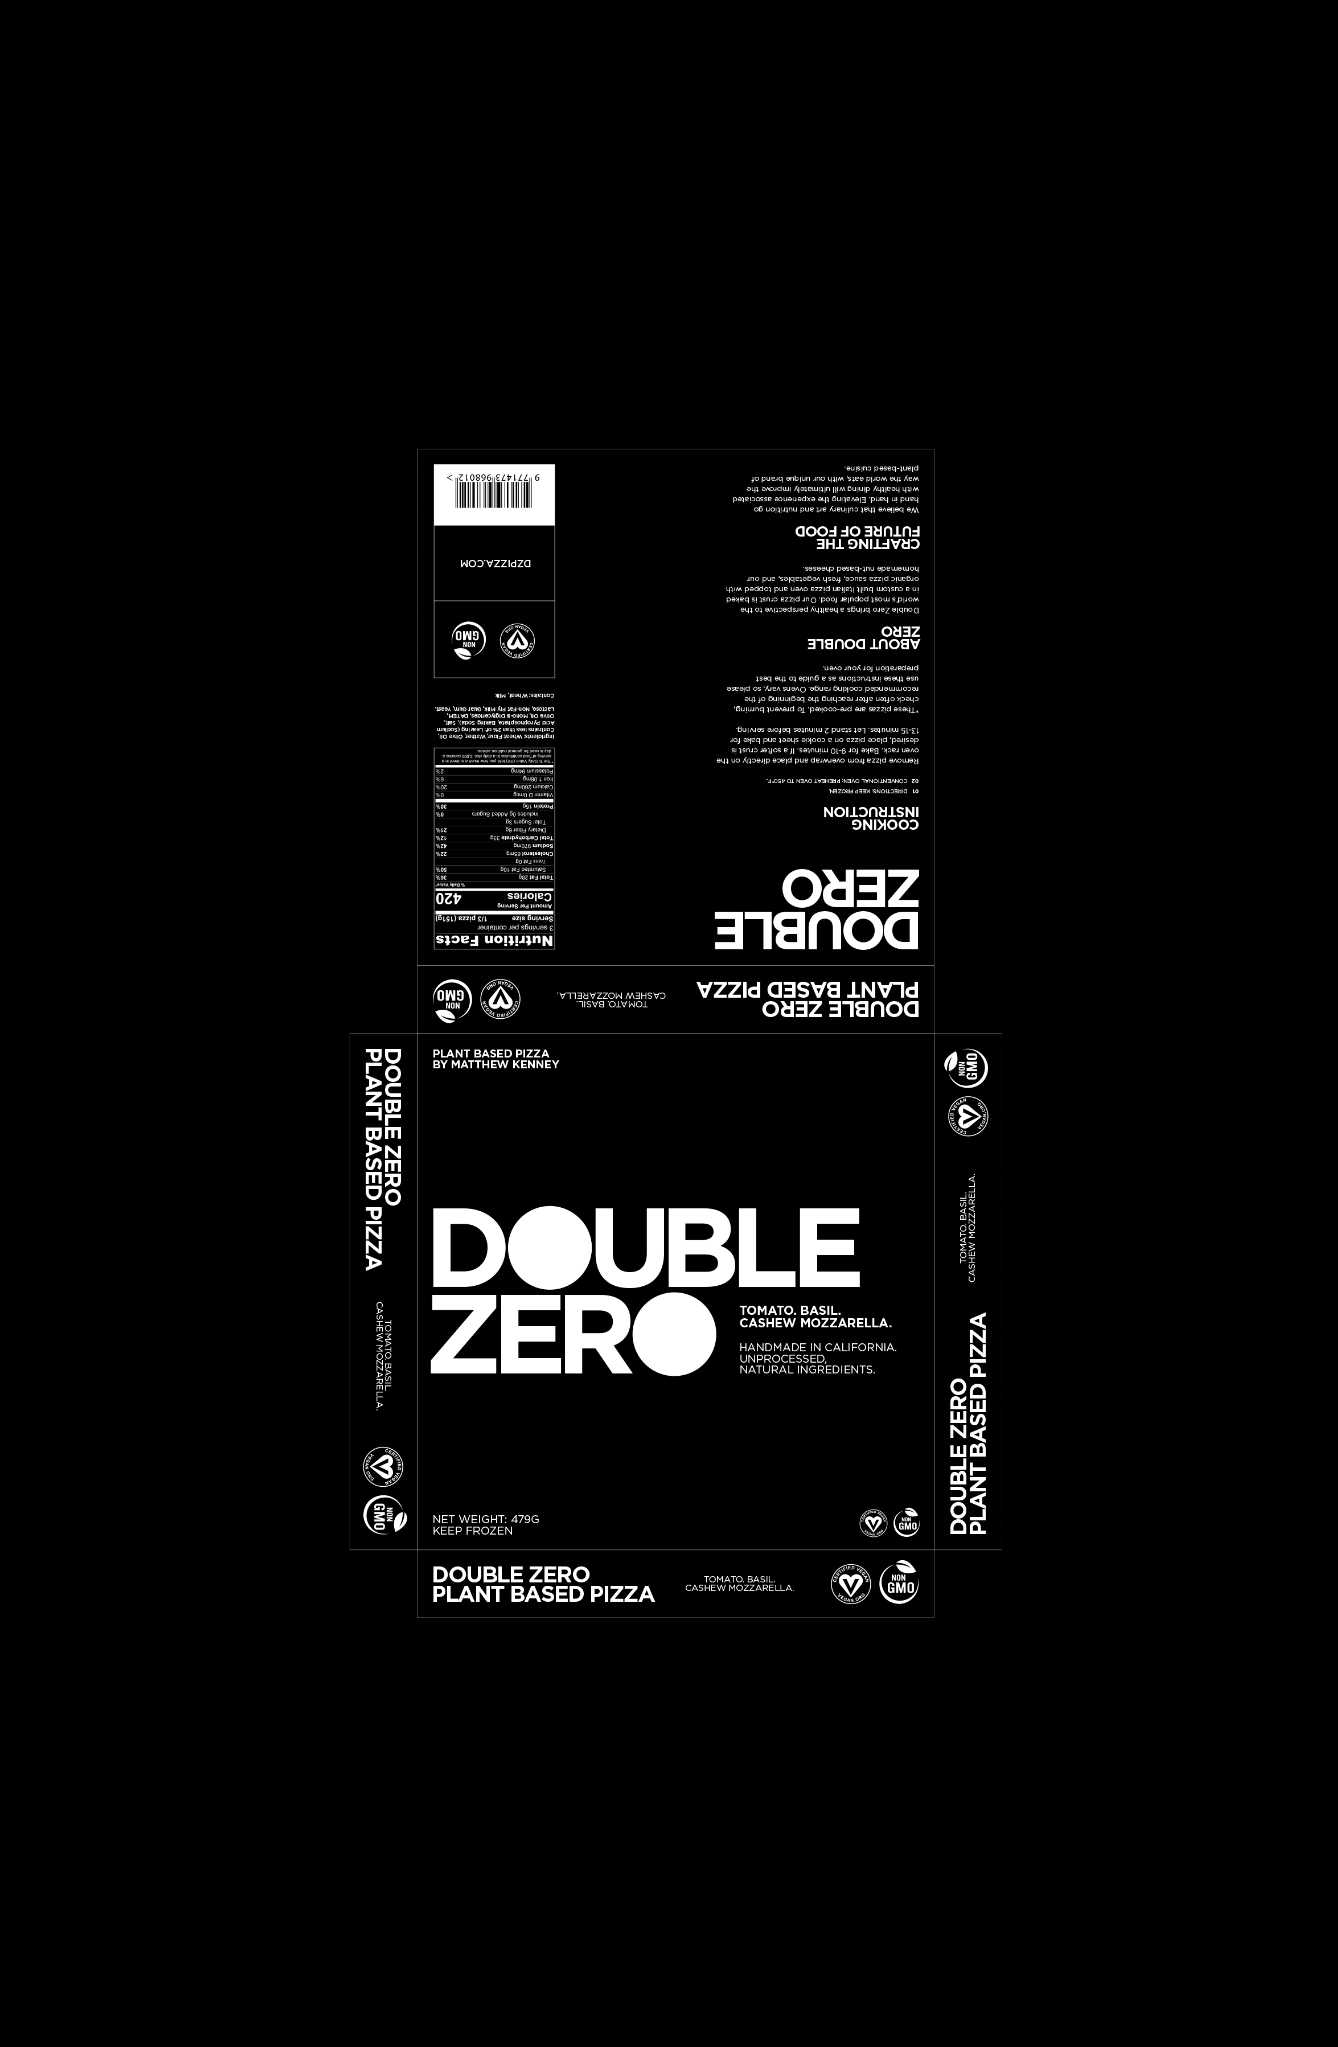 double zero preview copy 2